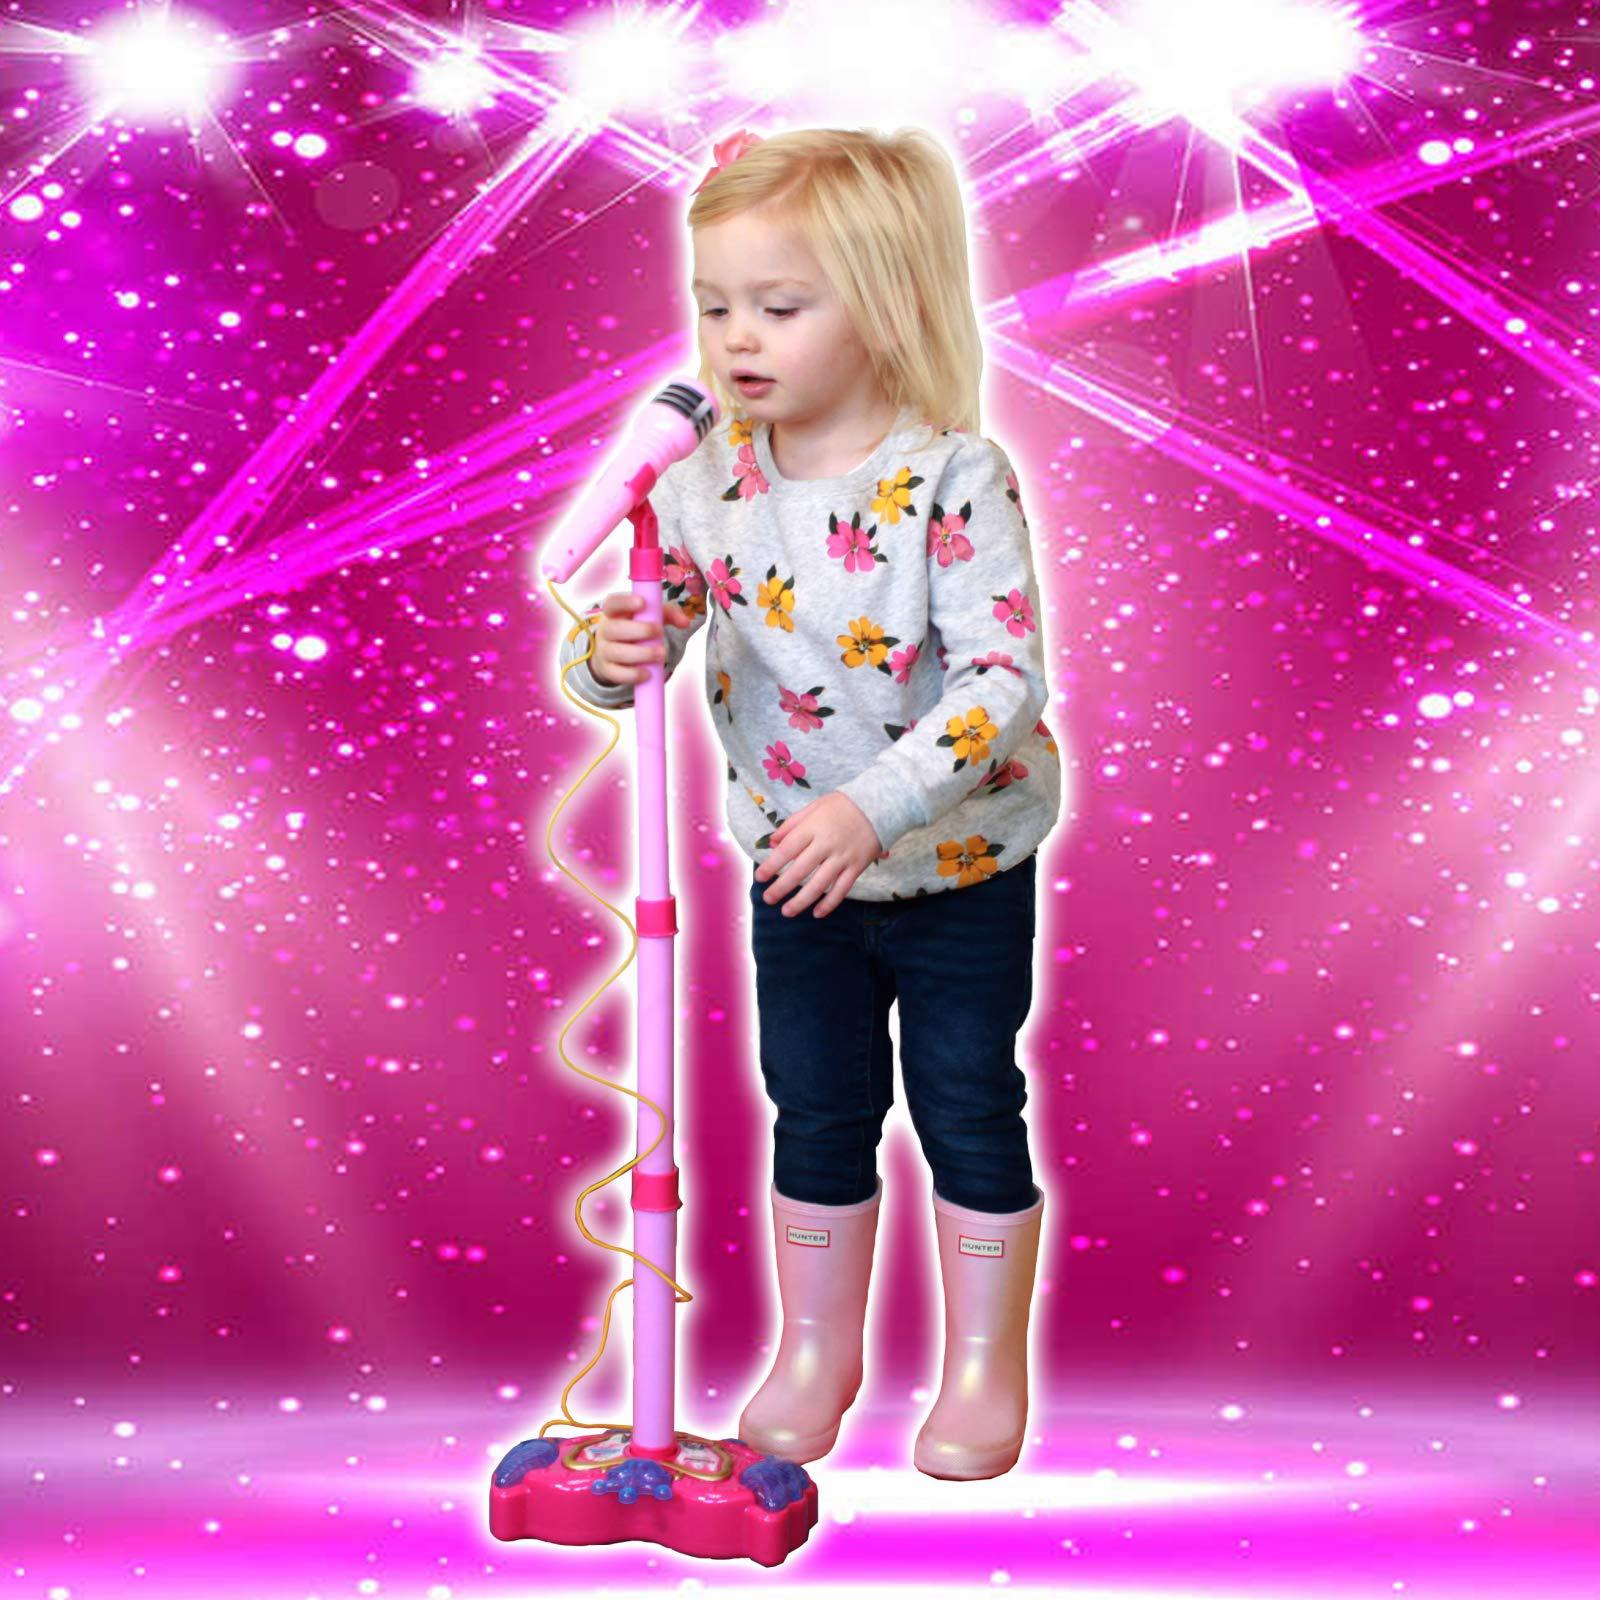 kid fun lilpals princess karaoke -children's toy stand up microphone play set w/built-in mp3 player, speaker, adjustable heig